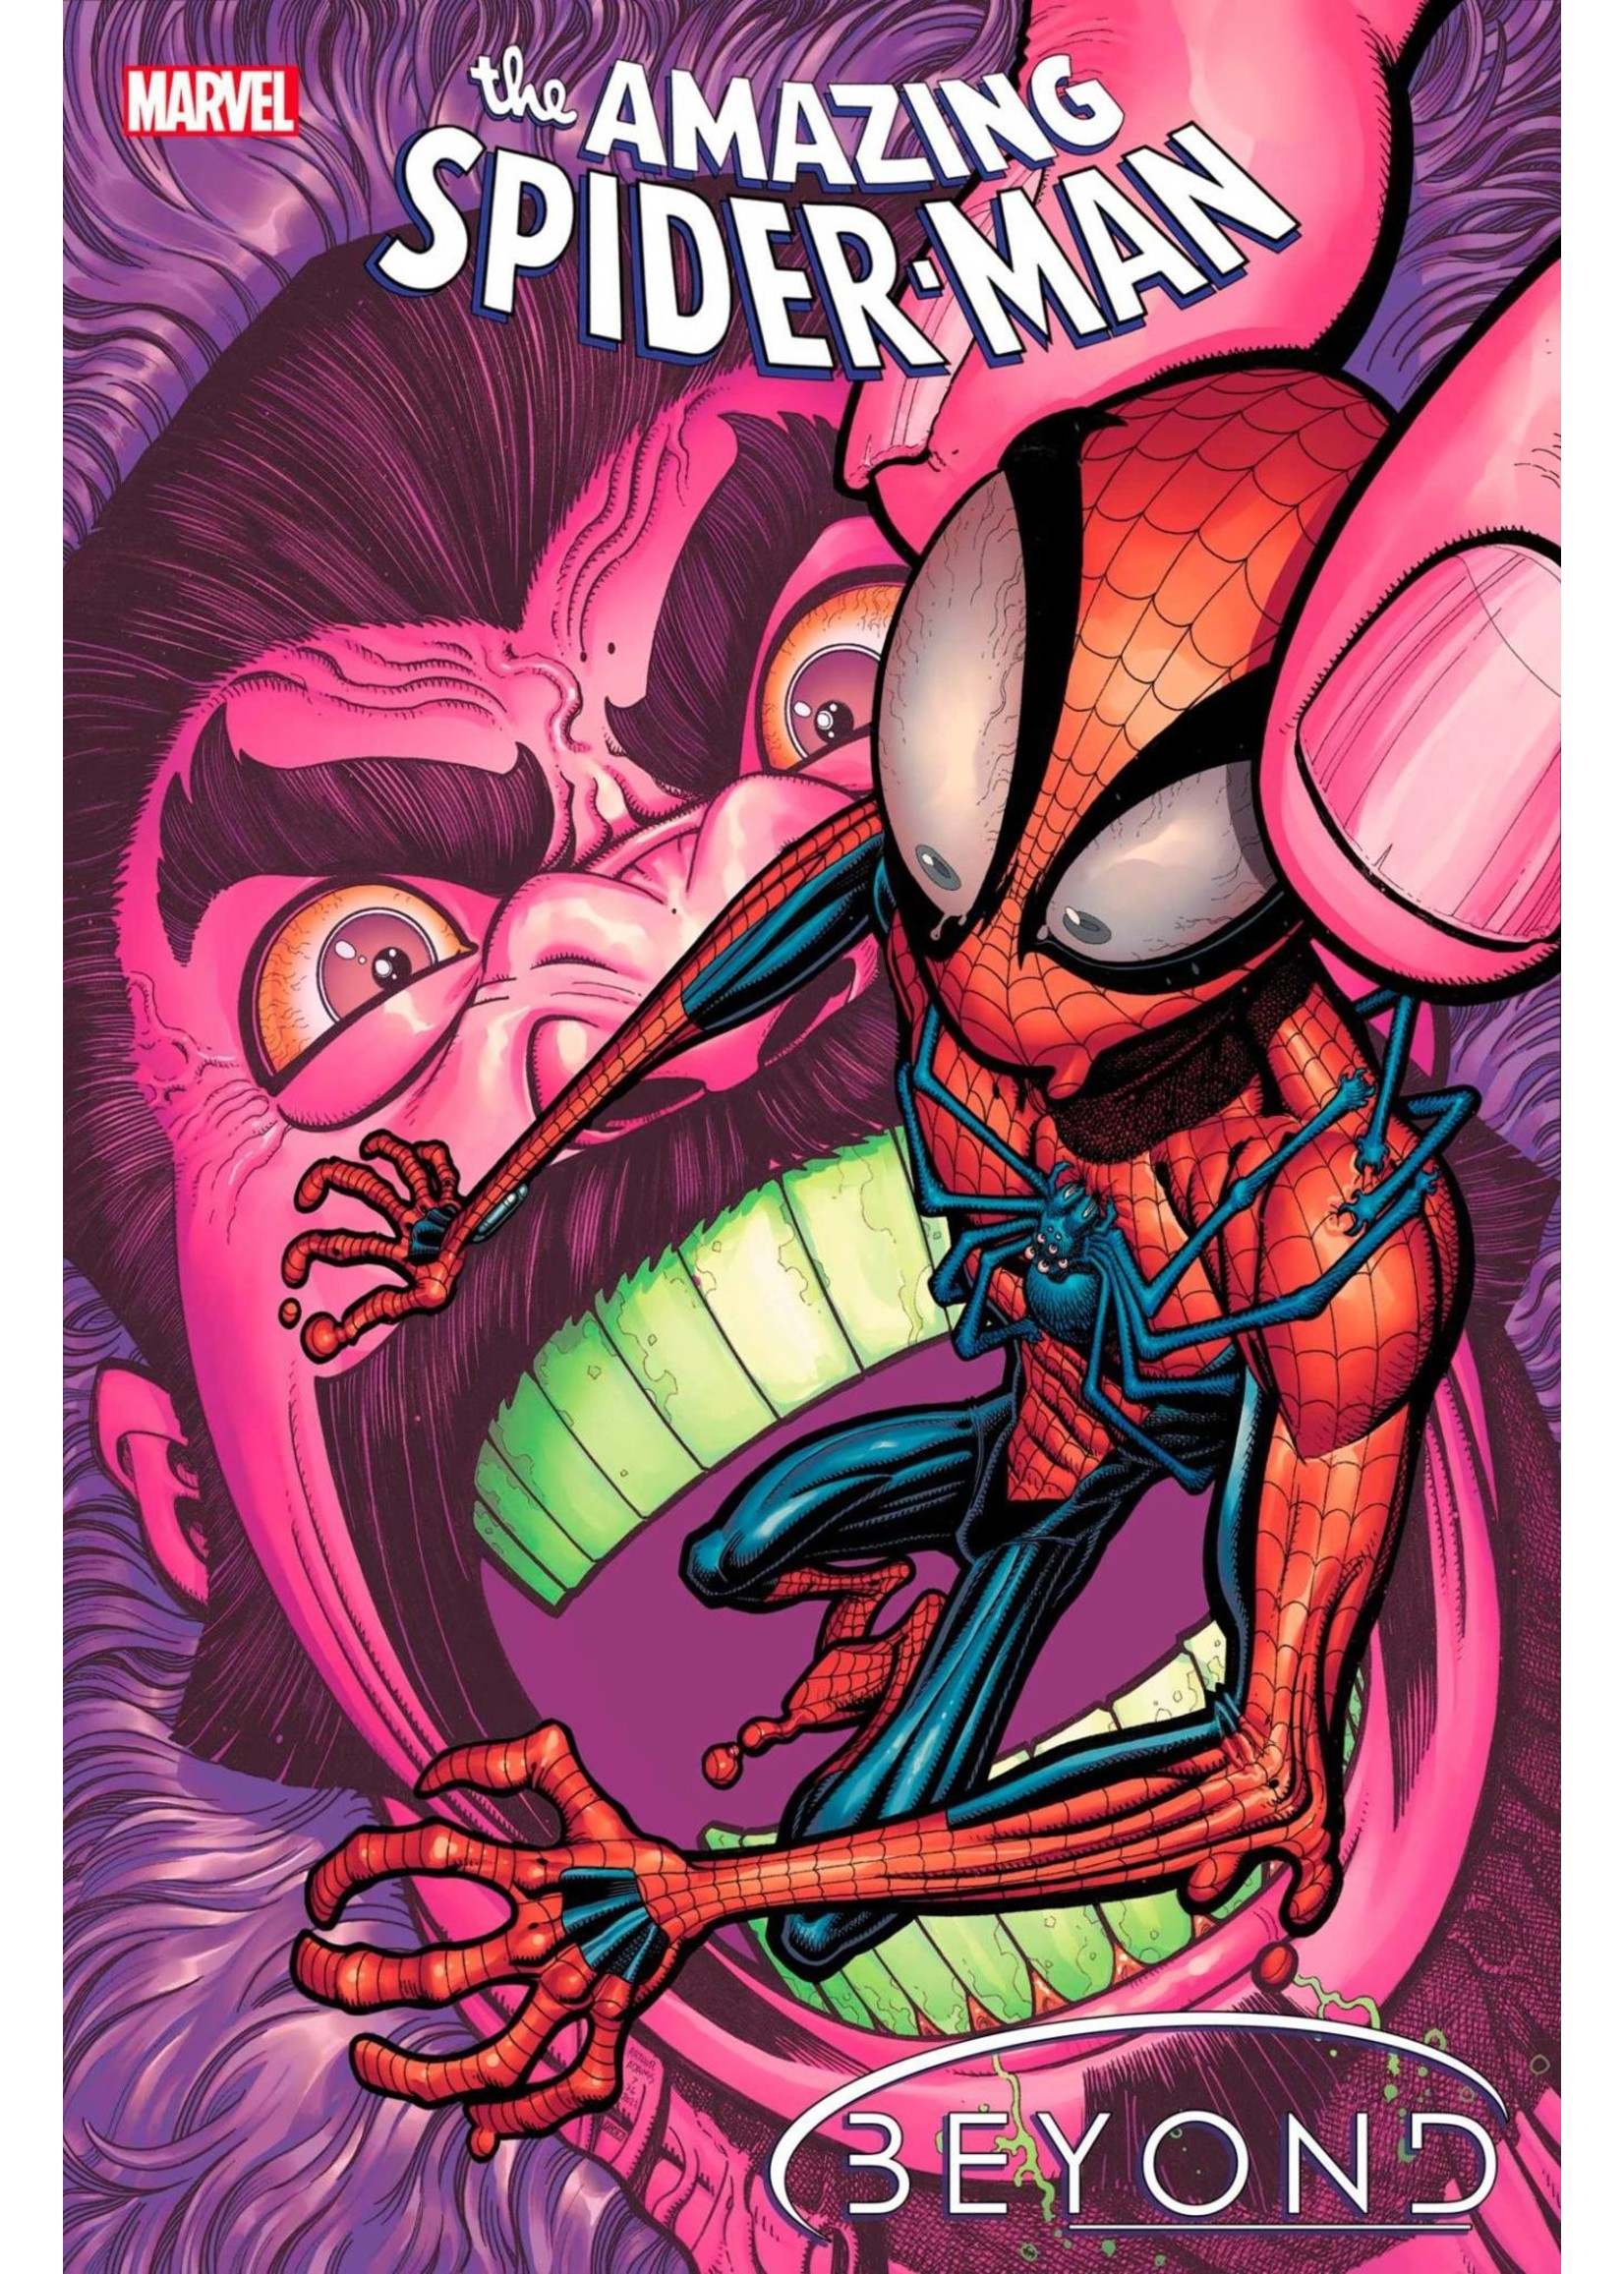 MARVEL COMICS AMAZING SPIDER-MAN #80